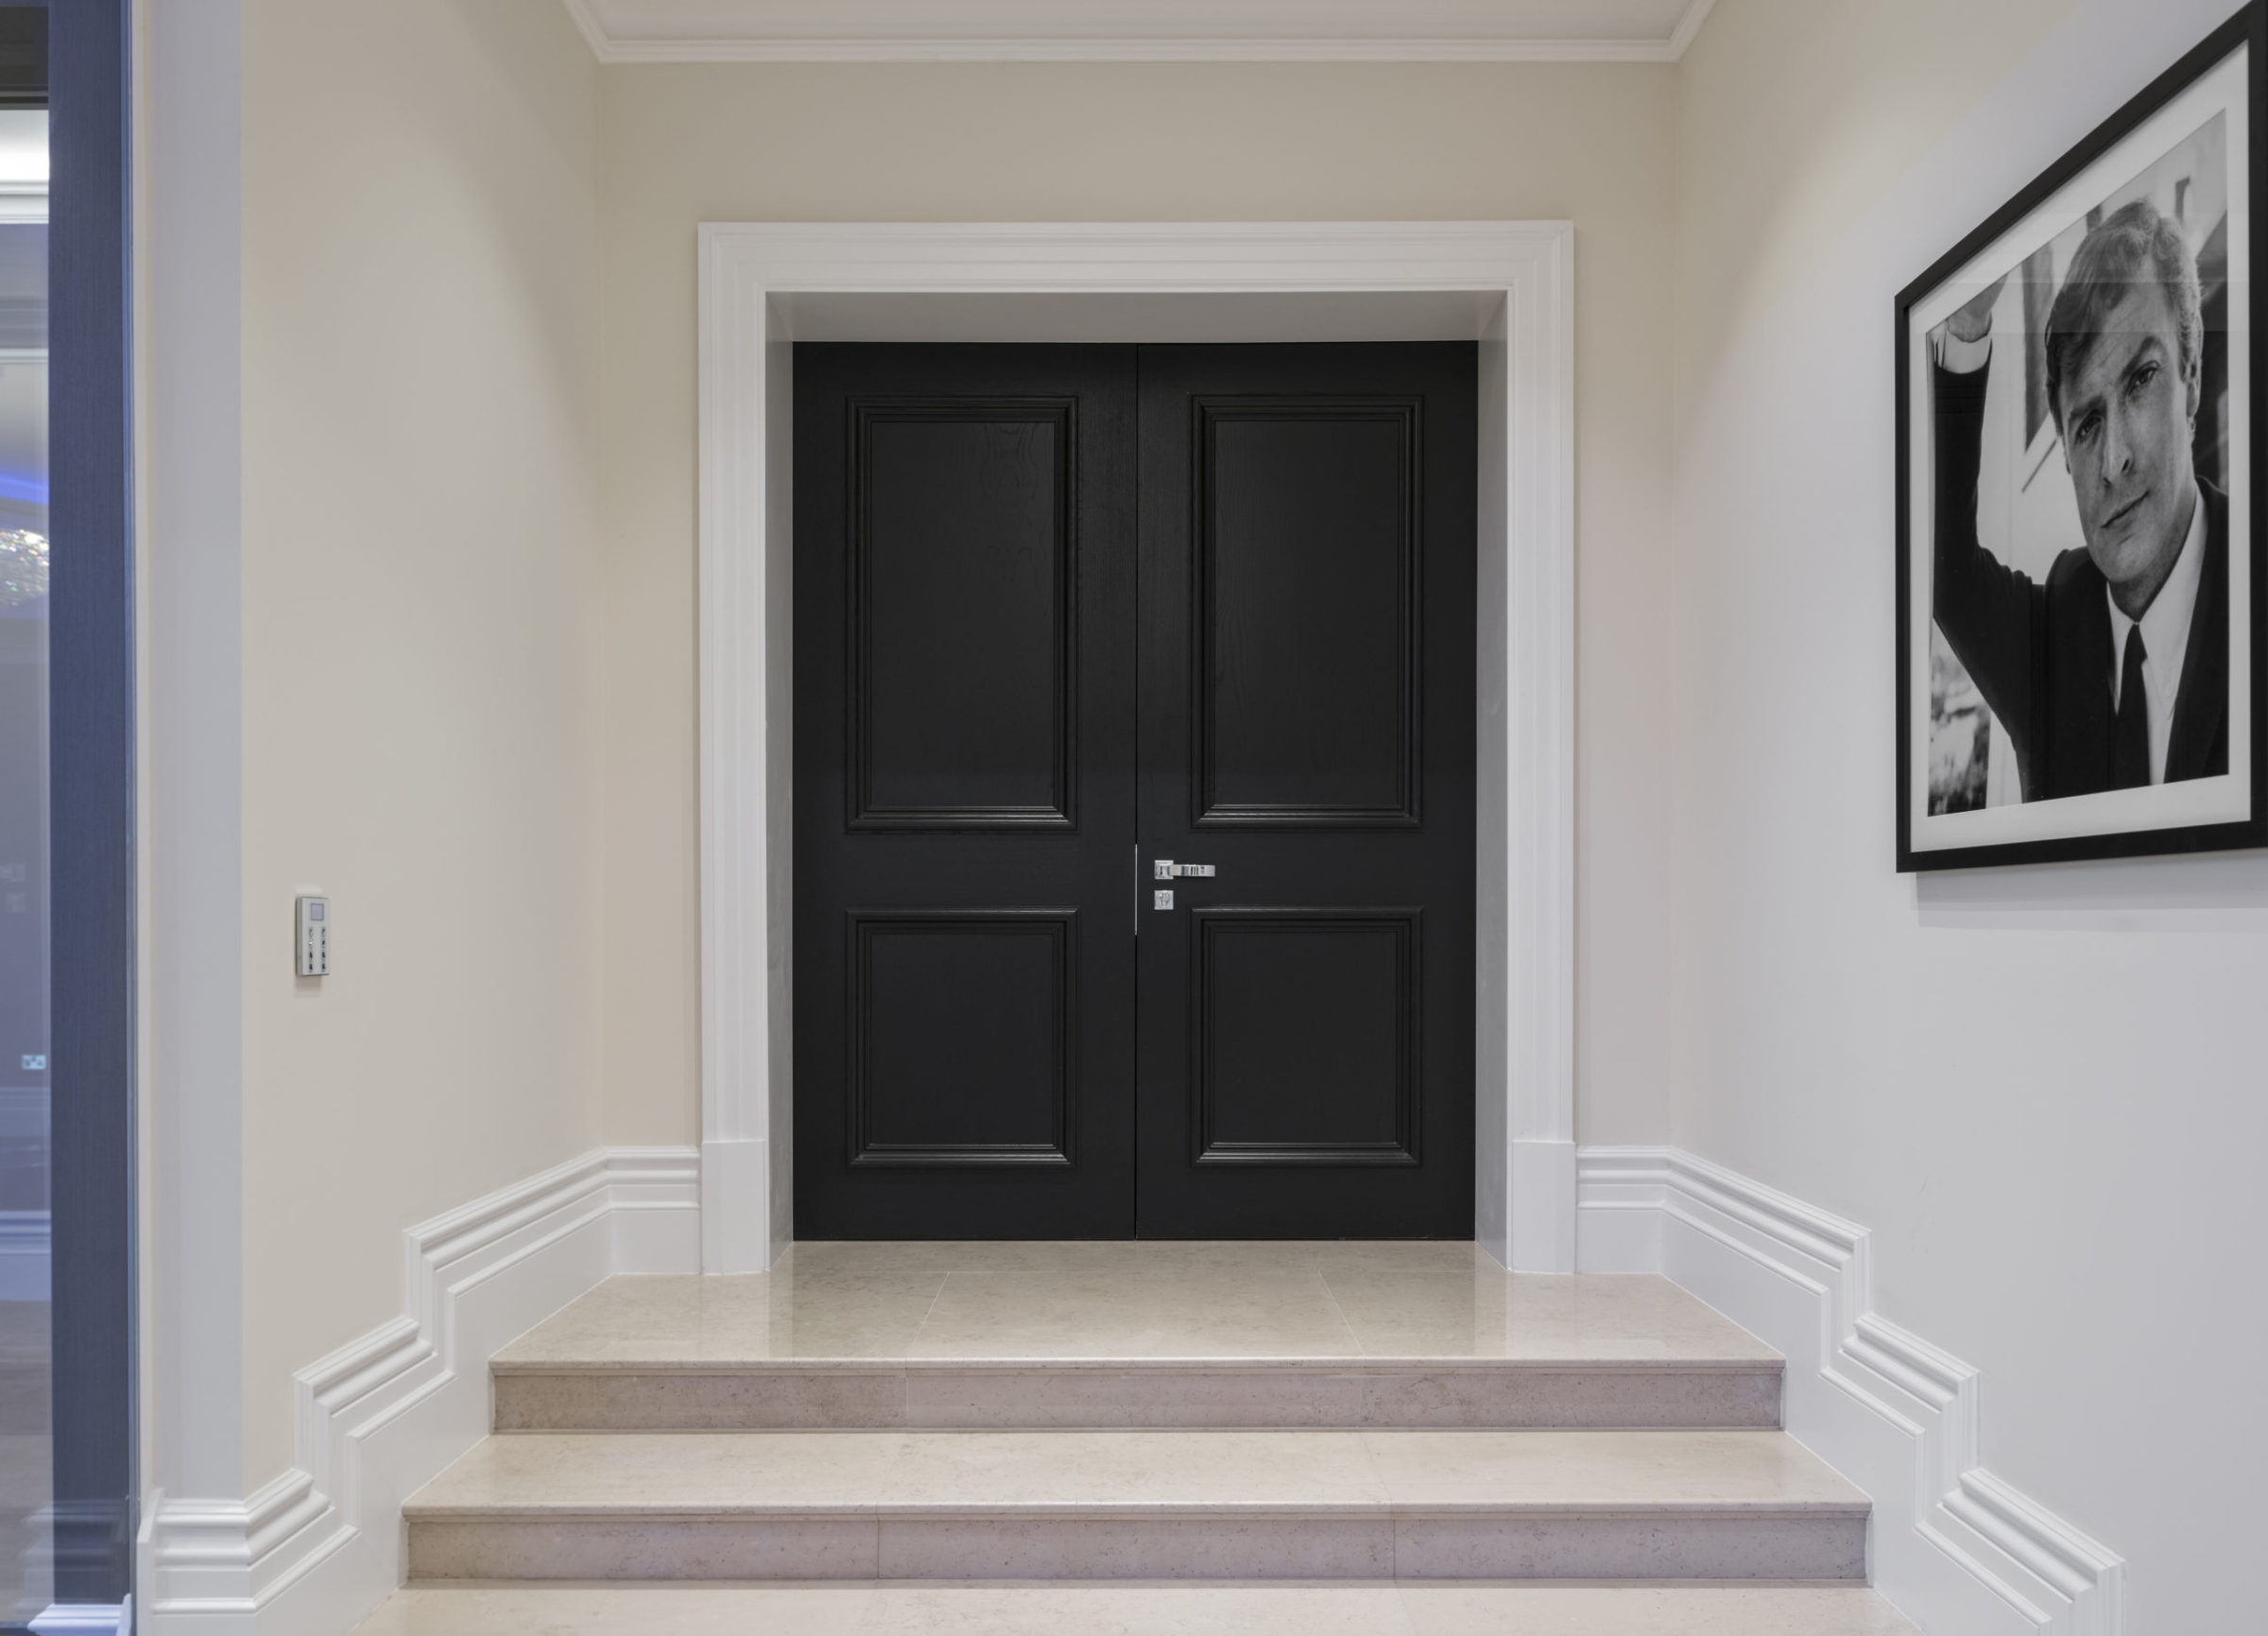 Panel doors – Ahmarra’s modern take on an elegant classic